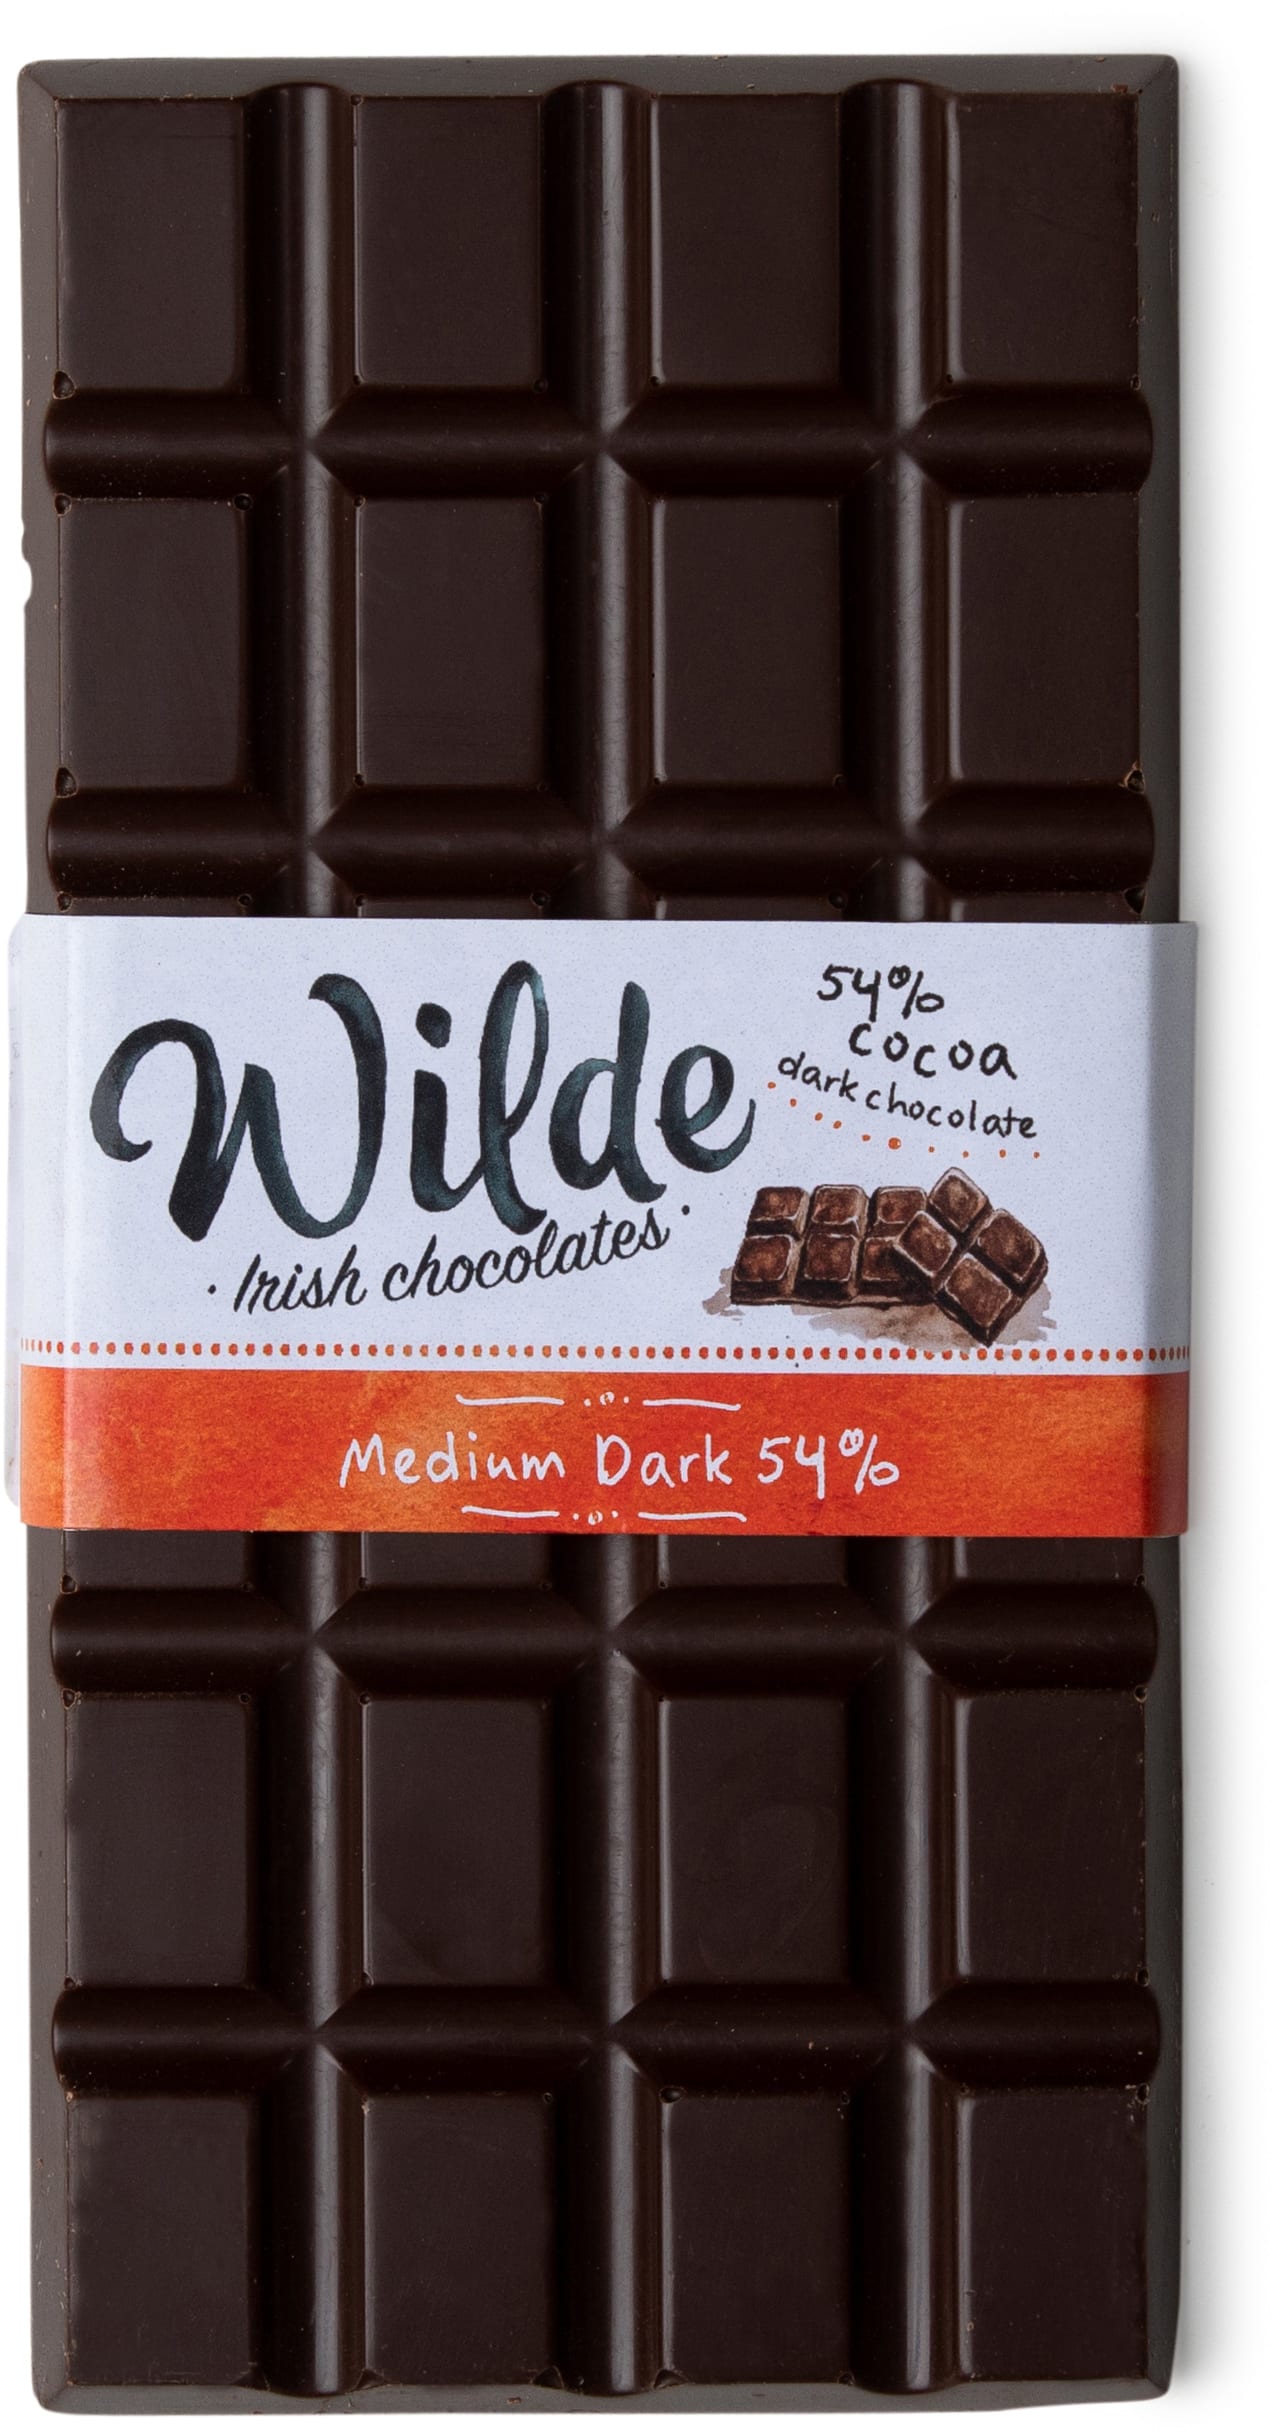 medium dark 54% chocolate bar - Wilde Irish Chocolates